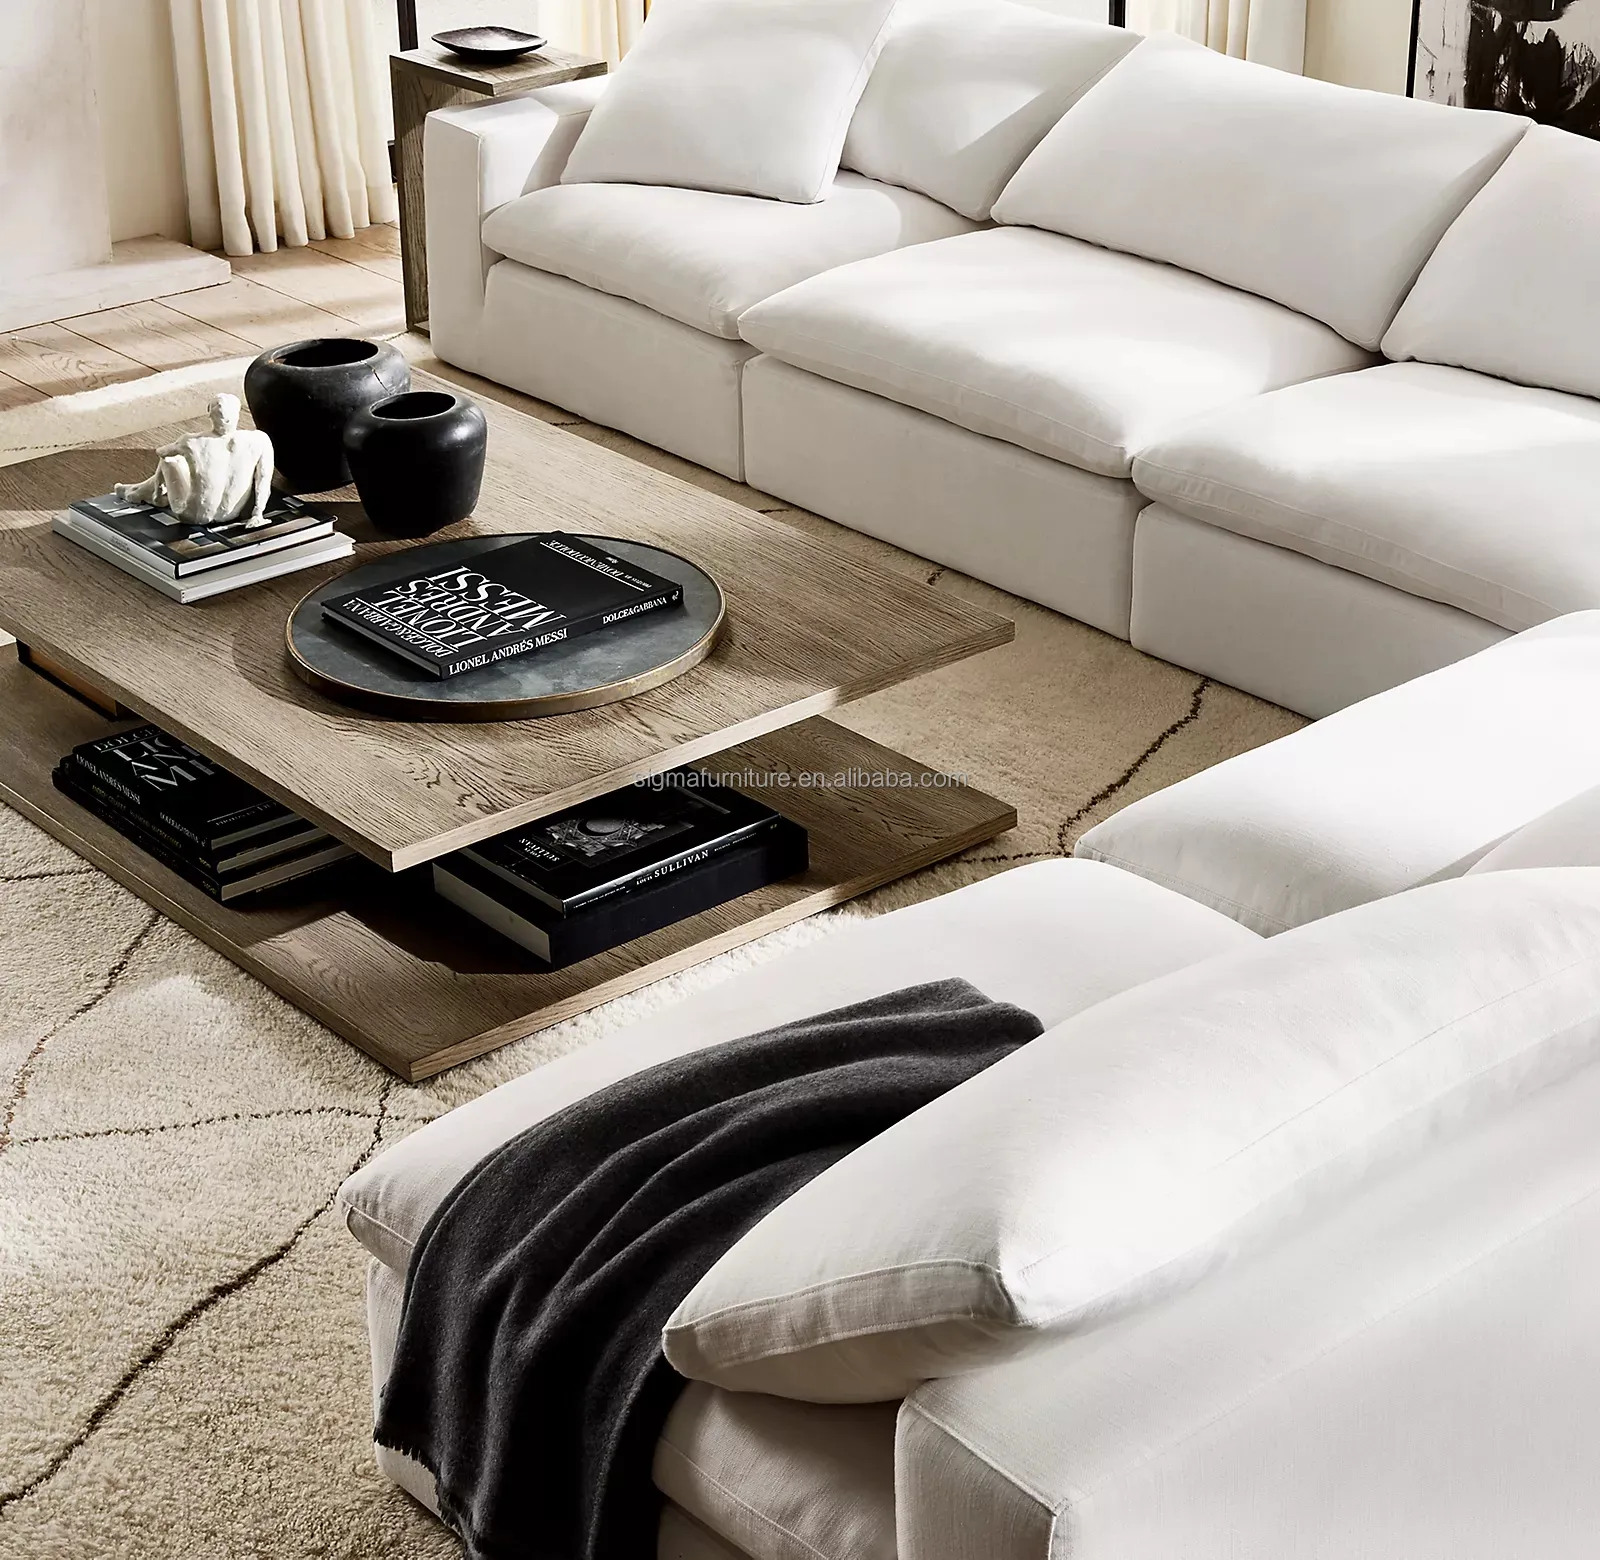 Hot Design Nordic Style Schlafs ofa moderne Wohnzimmer möbel Cloud Sofa Set L-Form Schnitts ofa modular